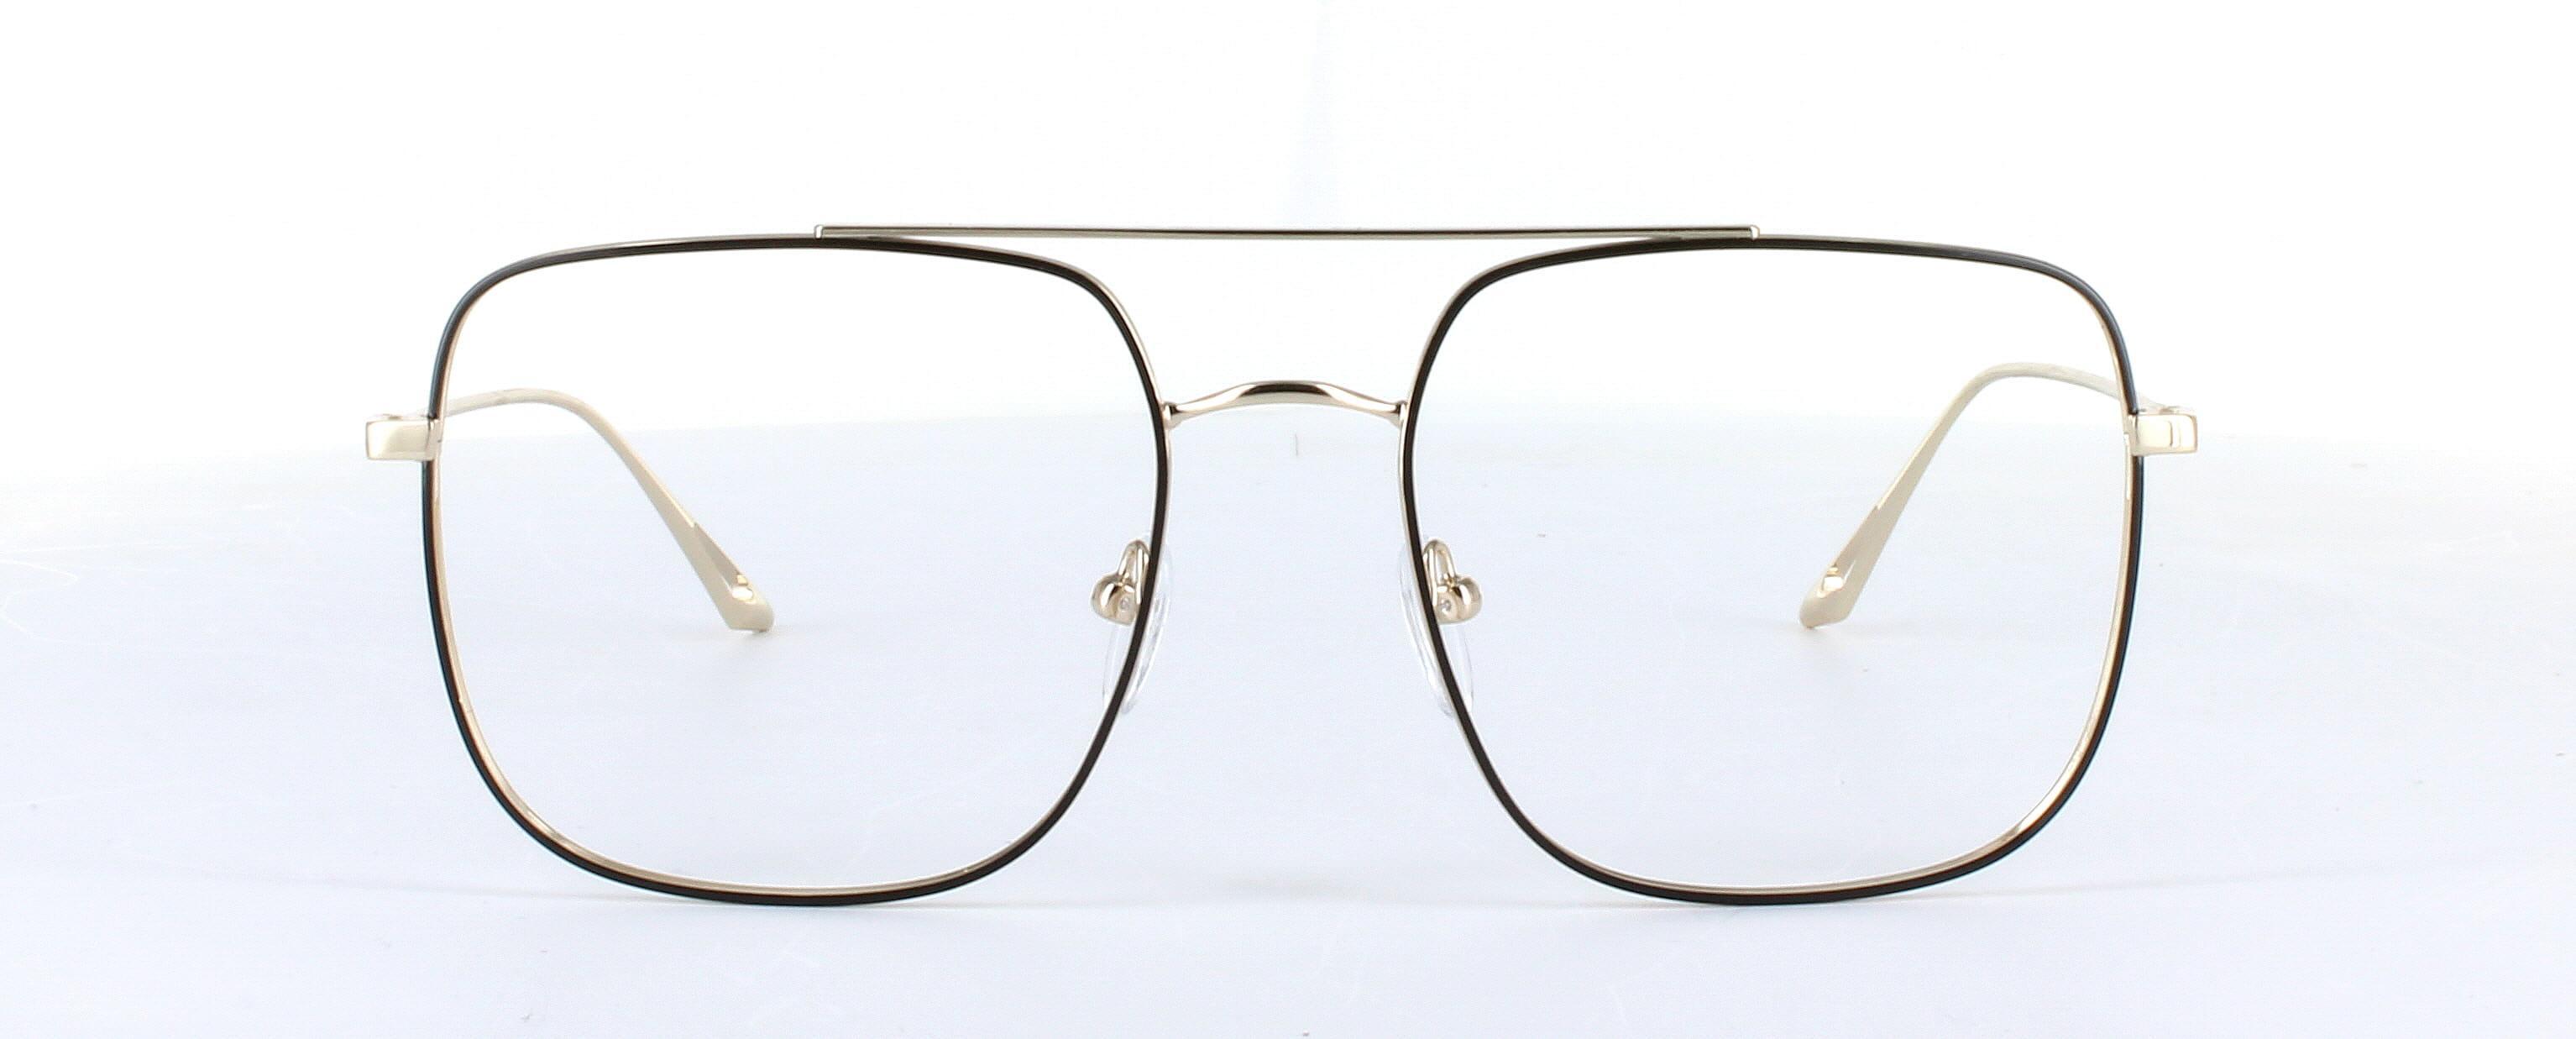 Eyecroxx 637 Grey Full Rim Aviator Metal Glasses - Image View 5